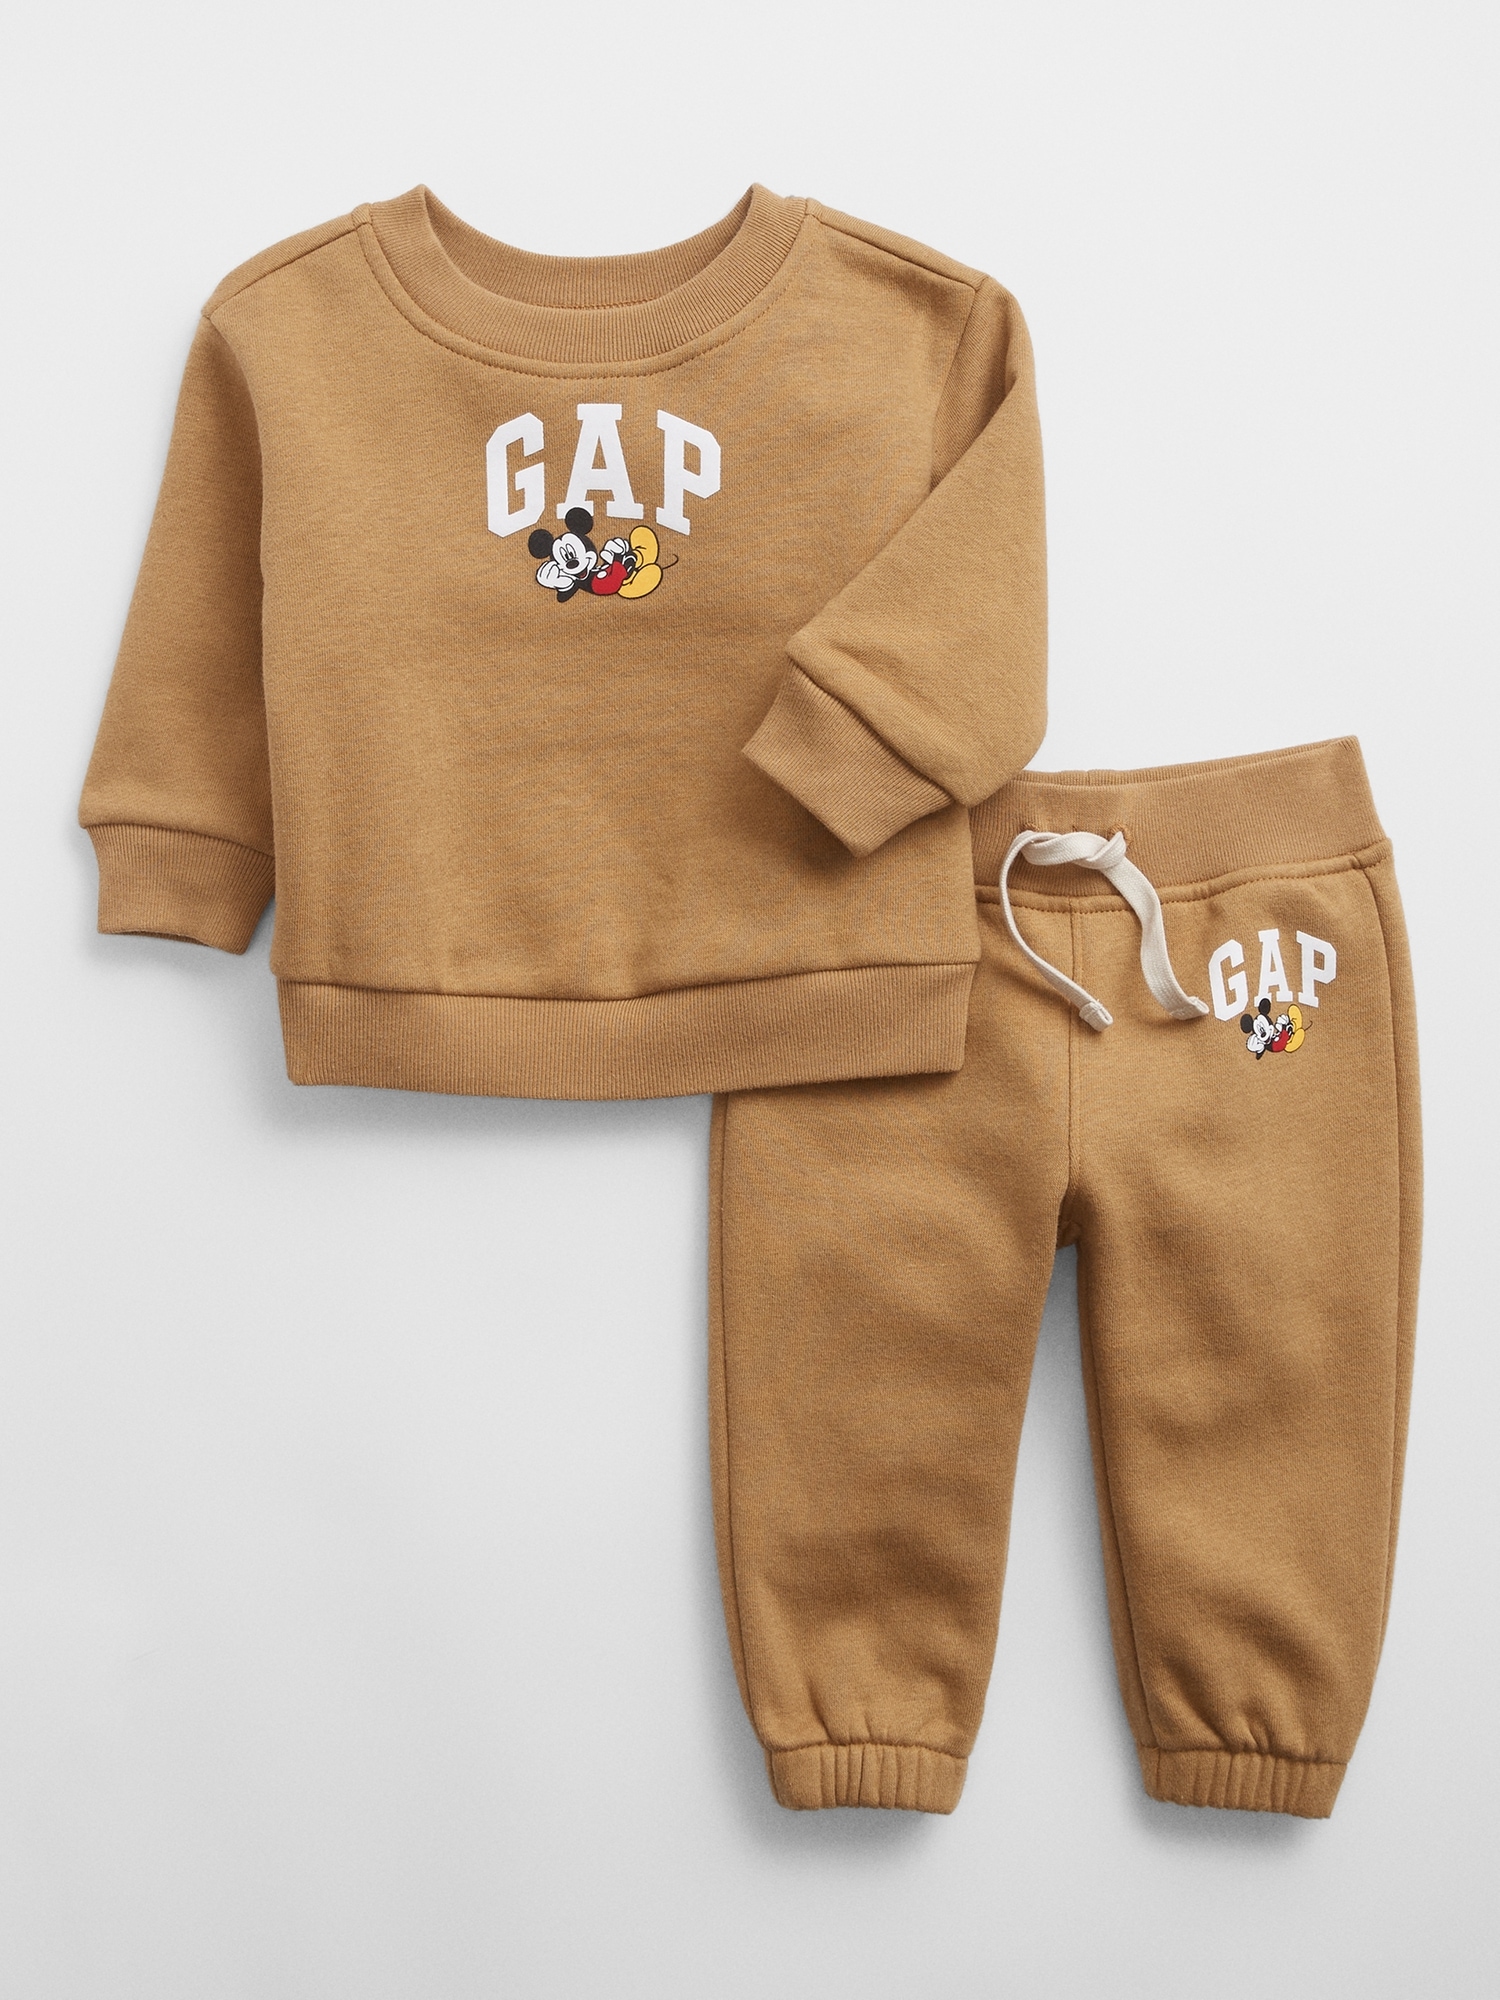 babyGap | Disney Mickey Mouse Logo Outfit Set | Gap Factory